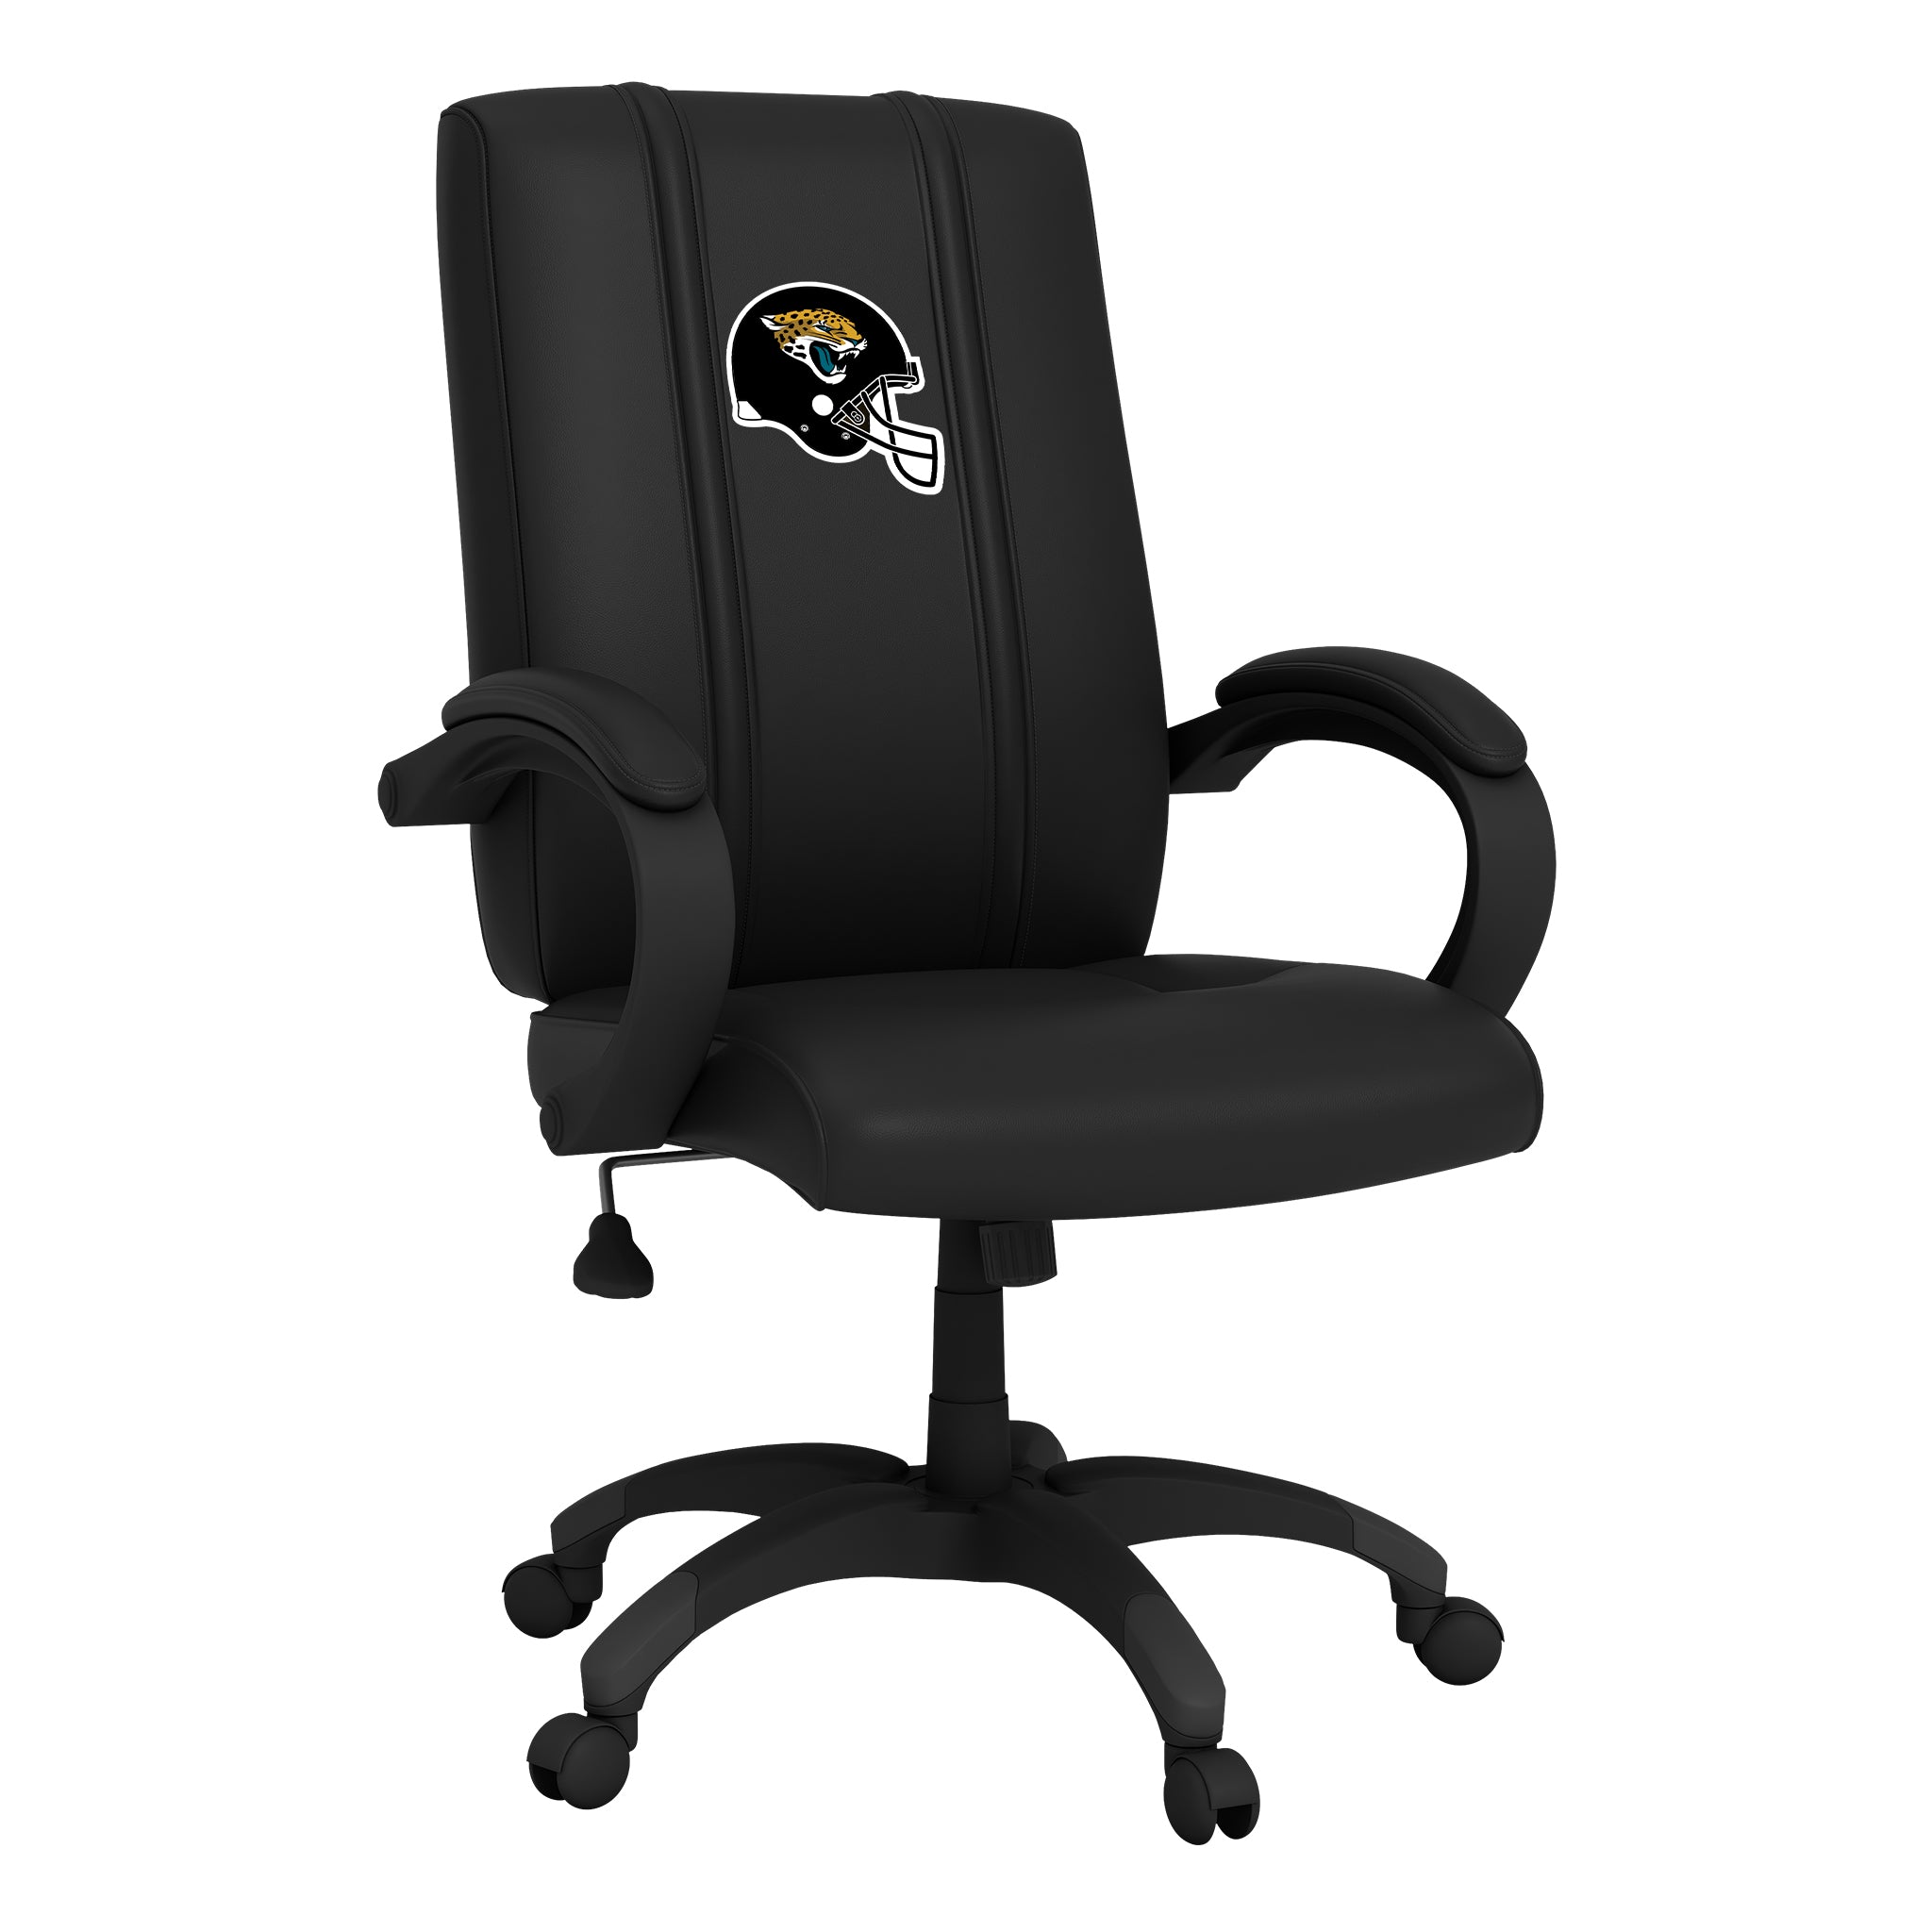 Jacksonville Jaguars Office Chair 1000